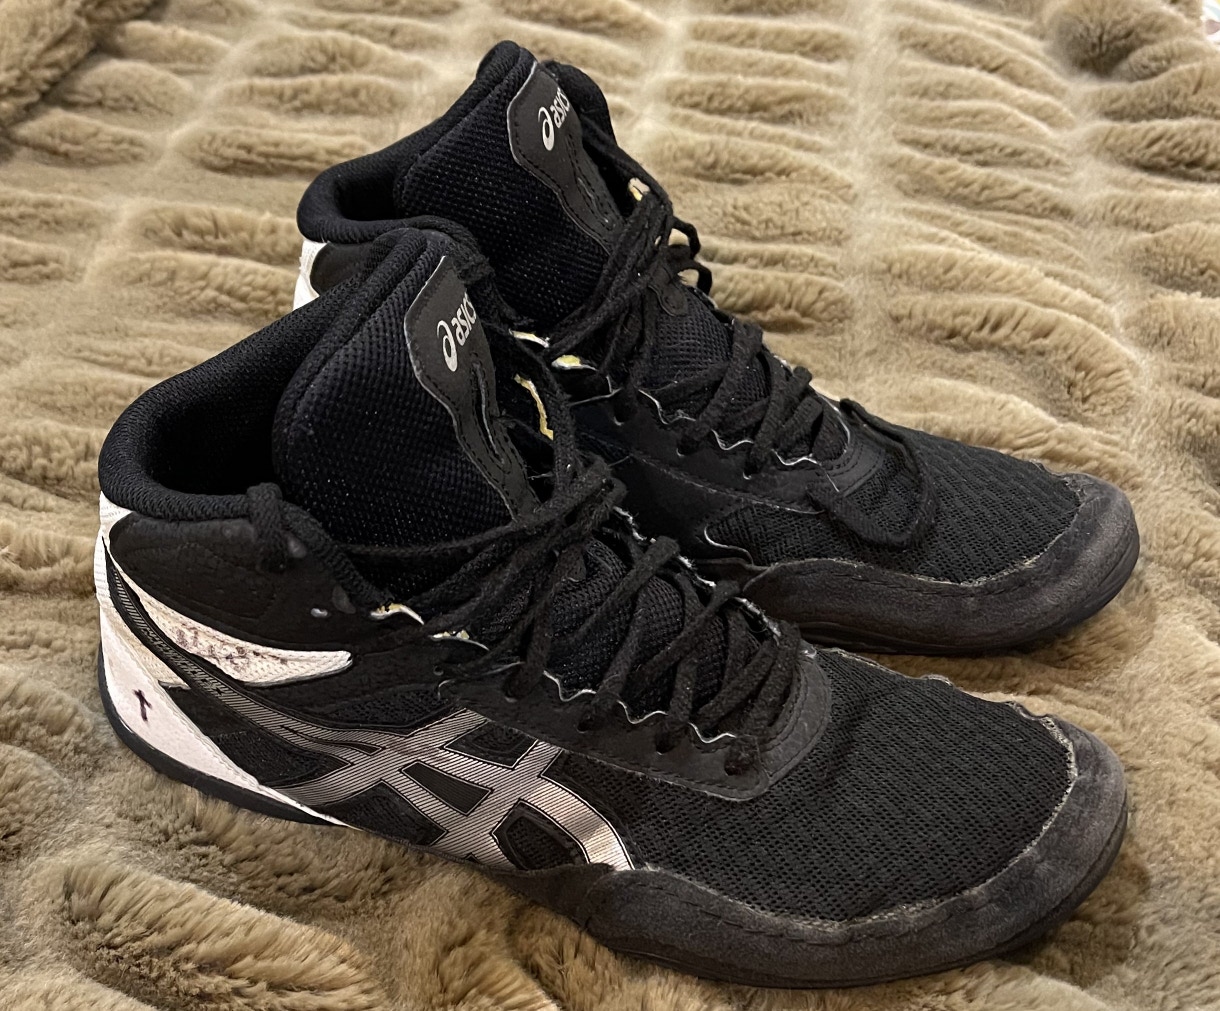 ASICS Wrestling Shoes, Matflex, 9.5, Black